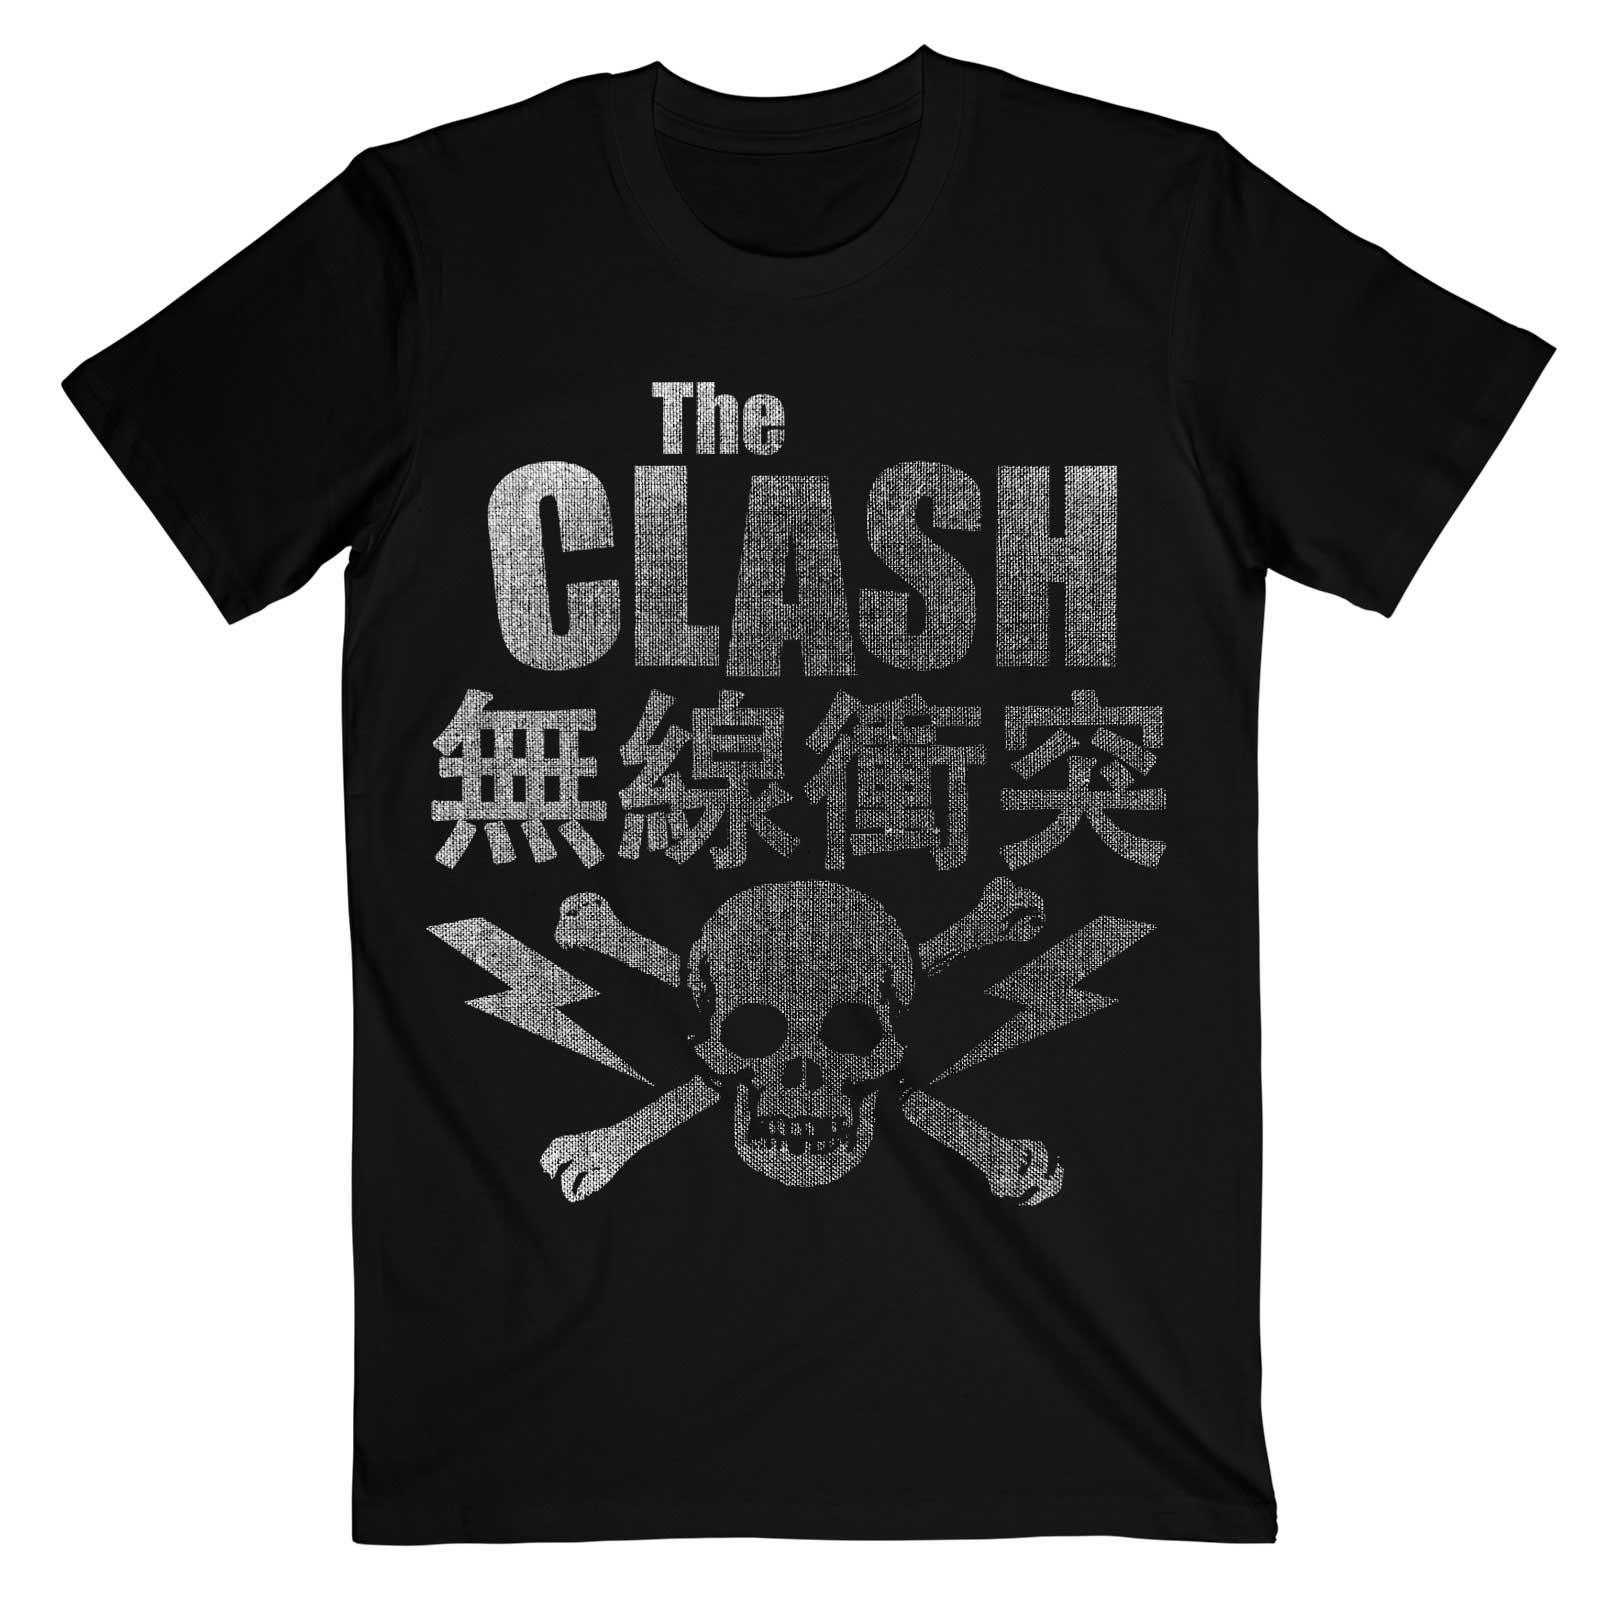 The Clash Skull and Crossbone Tee